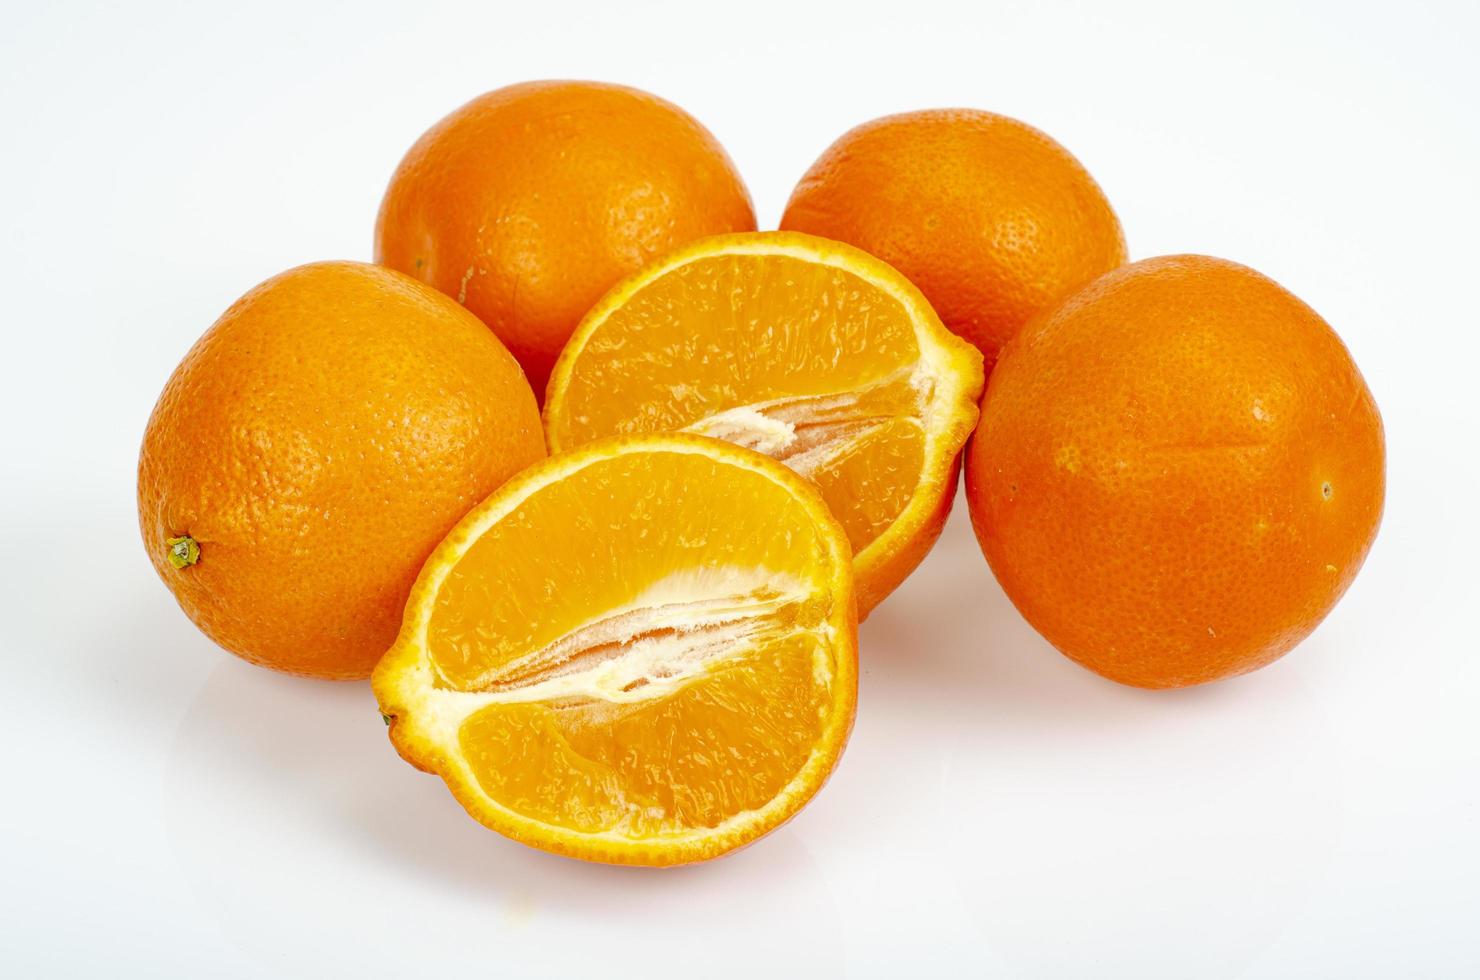 grandi mandarini dolci maturi isolati su sfondo bianco. foto in studio